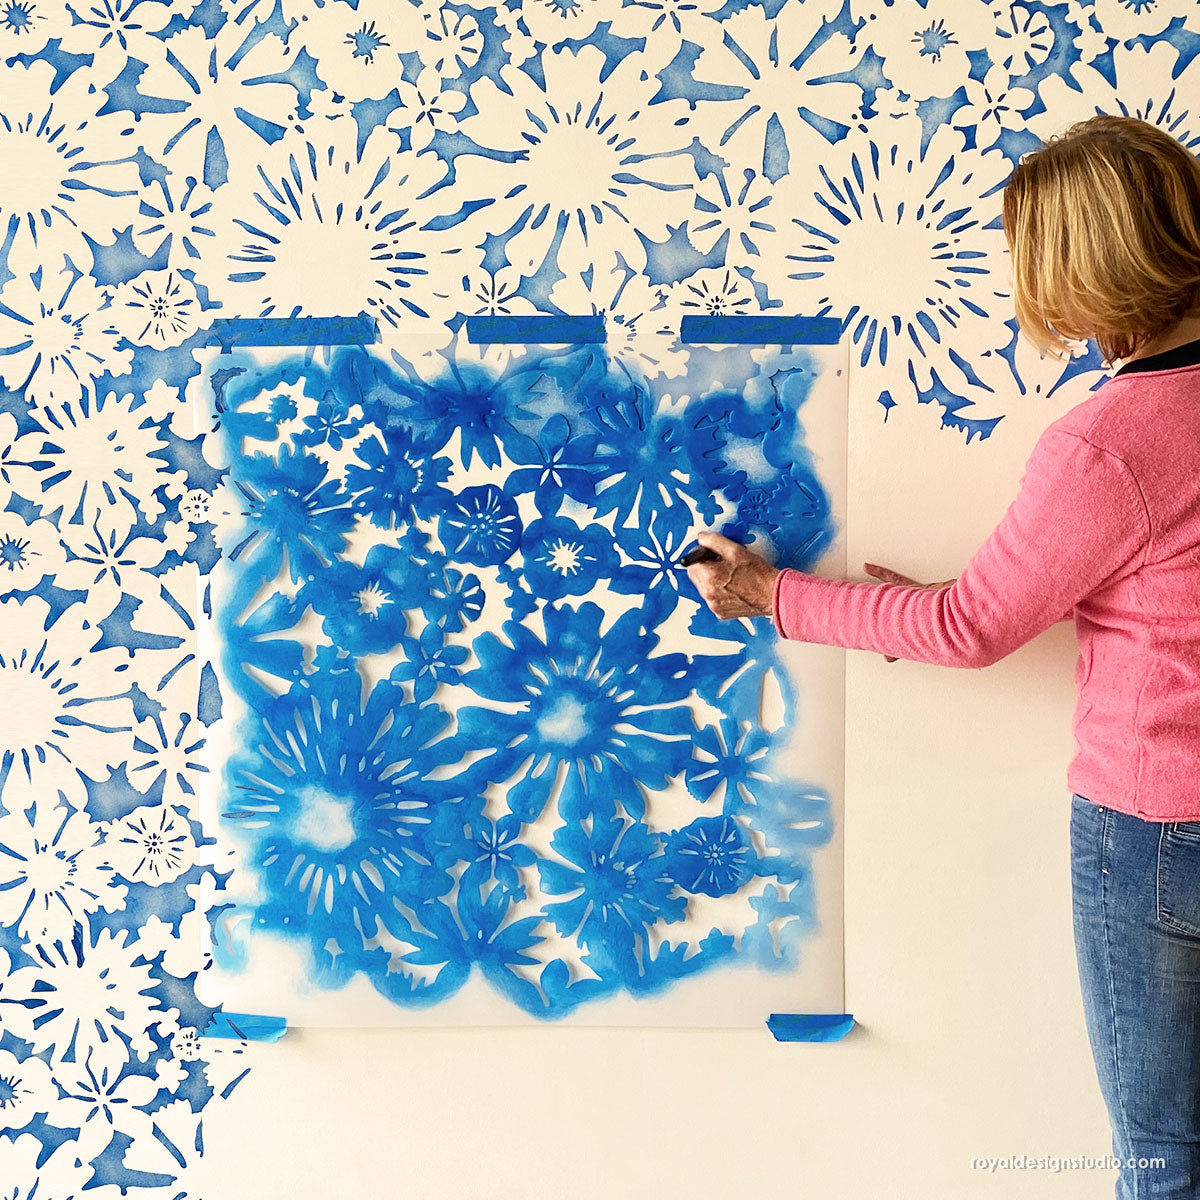 Modern Floral Wall Stencils - Painting DIY Flower Wallpaper Designs